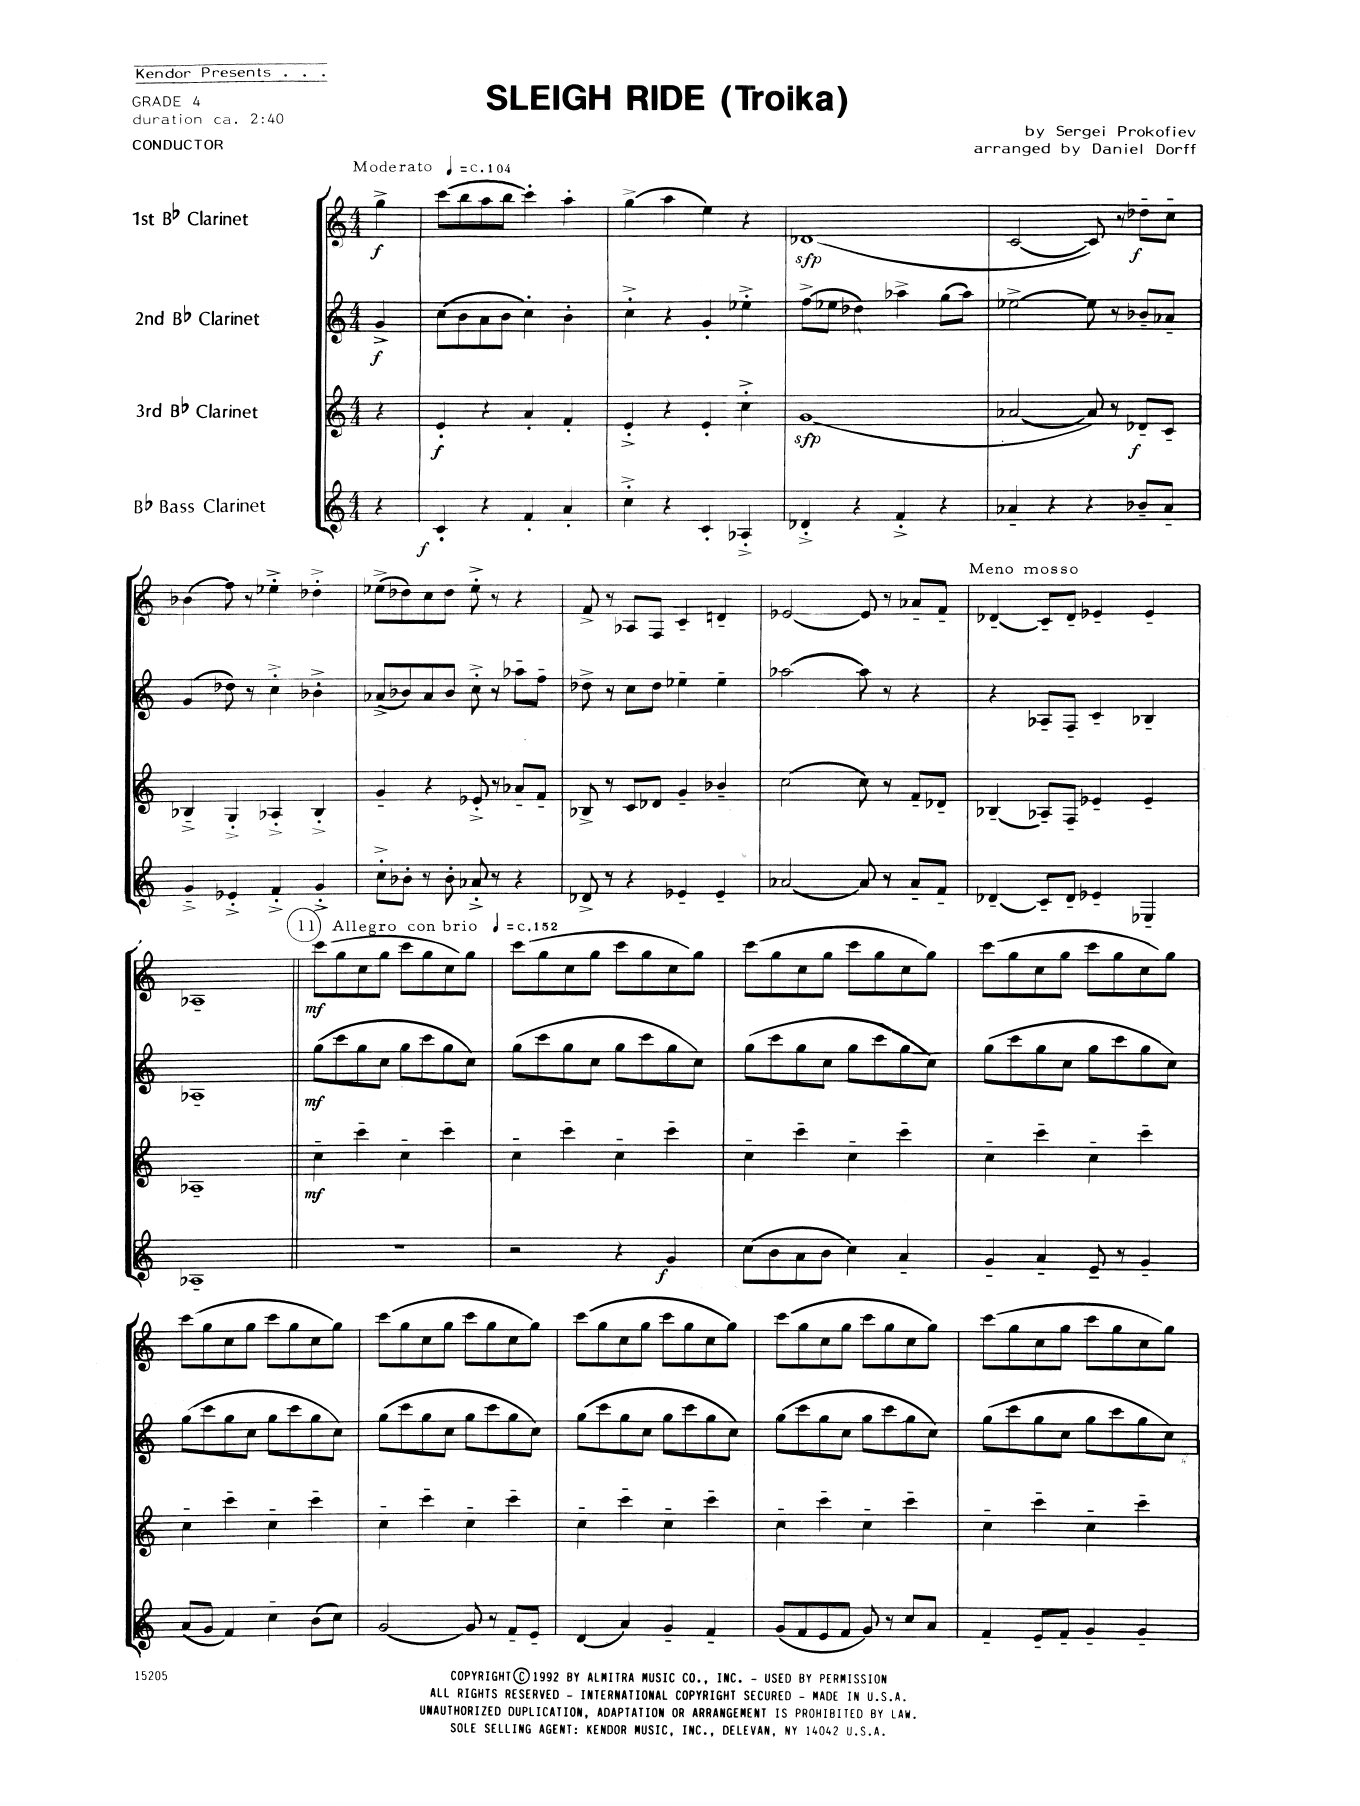 Download Daniel Dorff Sleigh Ride (Troika) - Full Score Sheet Music